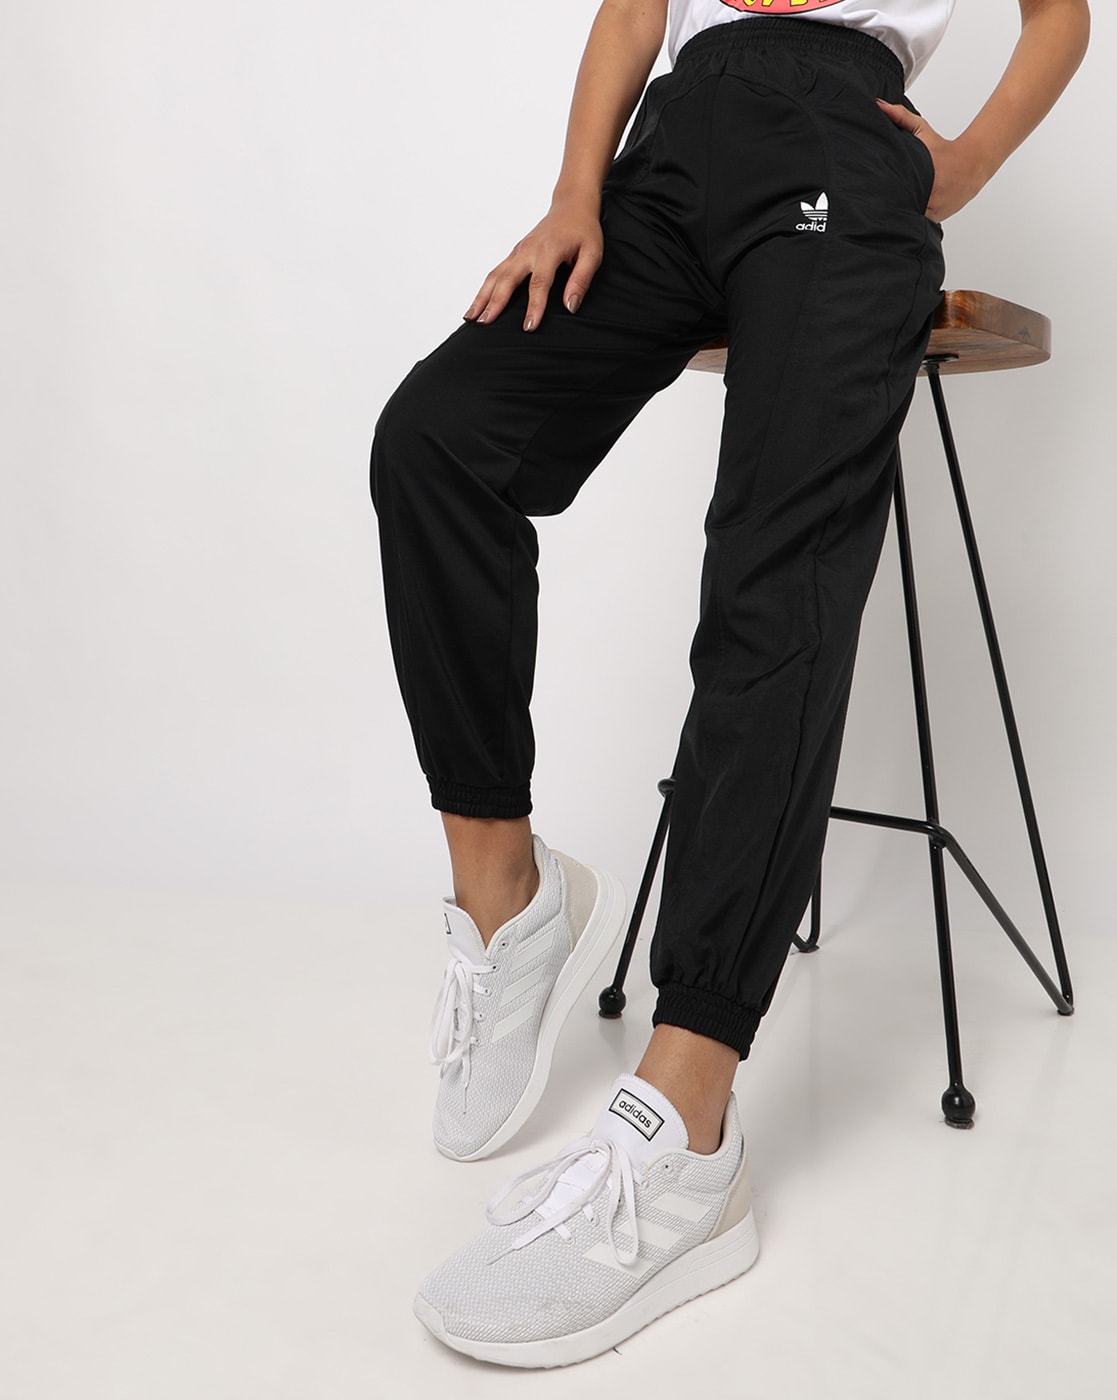 Ladies Fashion Casual Work Pants Loose Sweatpants Solid Color Plus Size Women's  Pants at Amazon Women's Clothing store